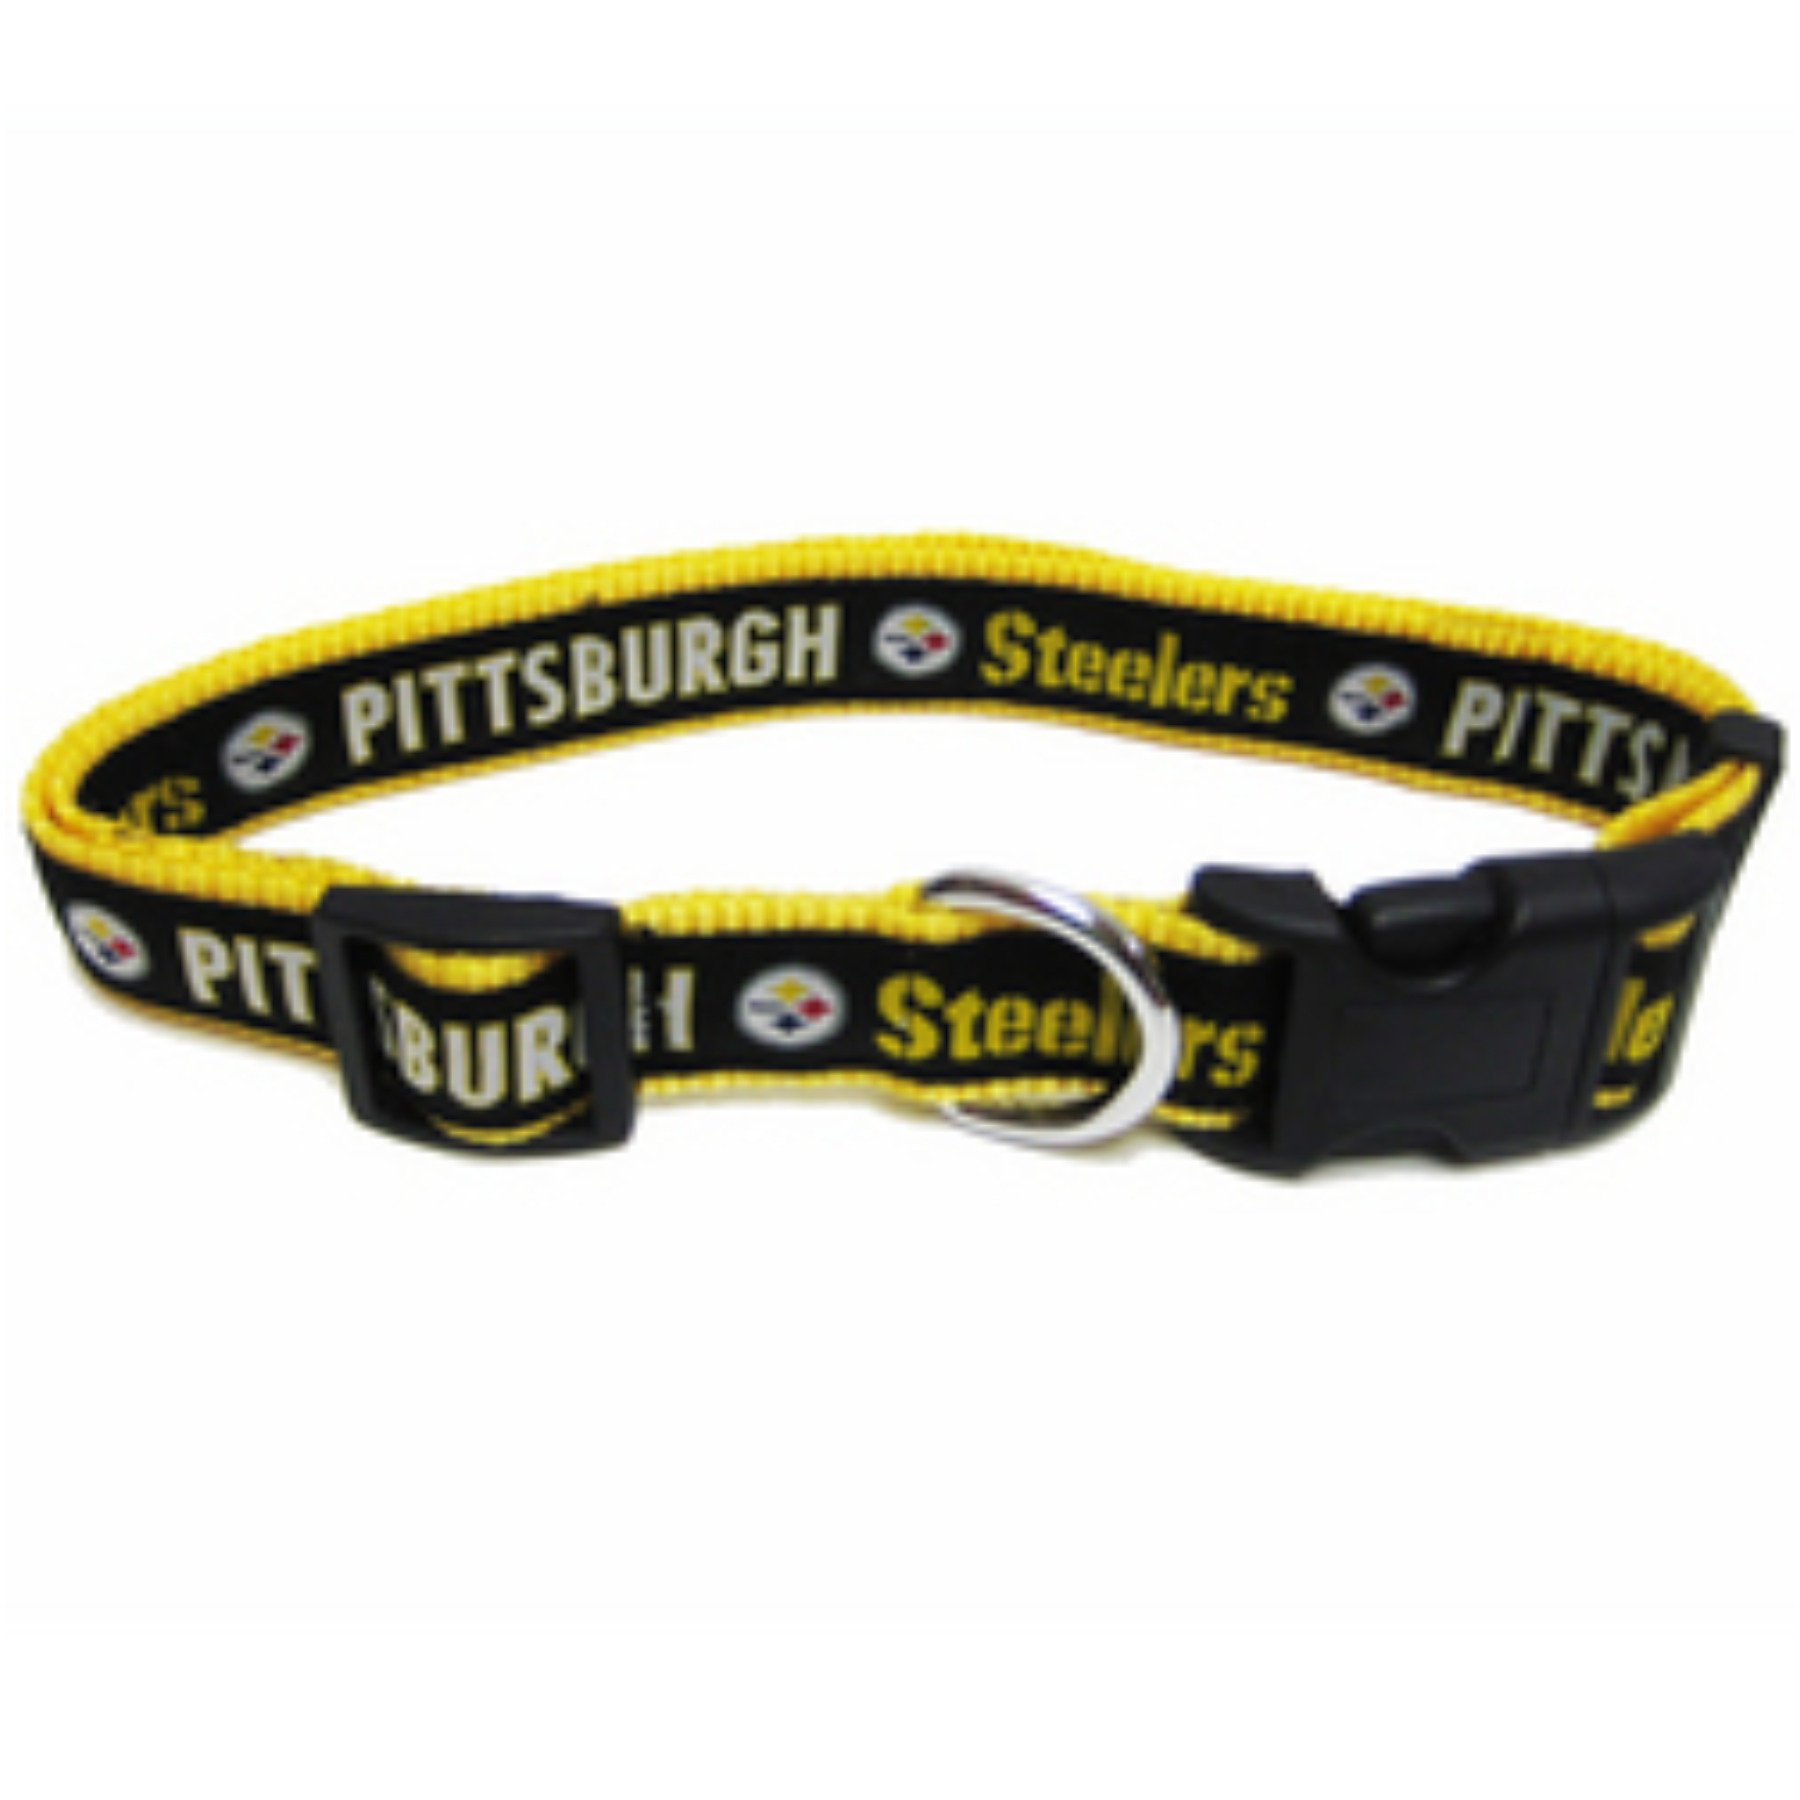 Pittsburgh Steelers Dog Collar - Ribbon